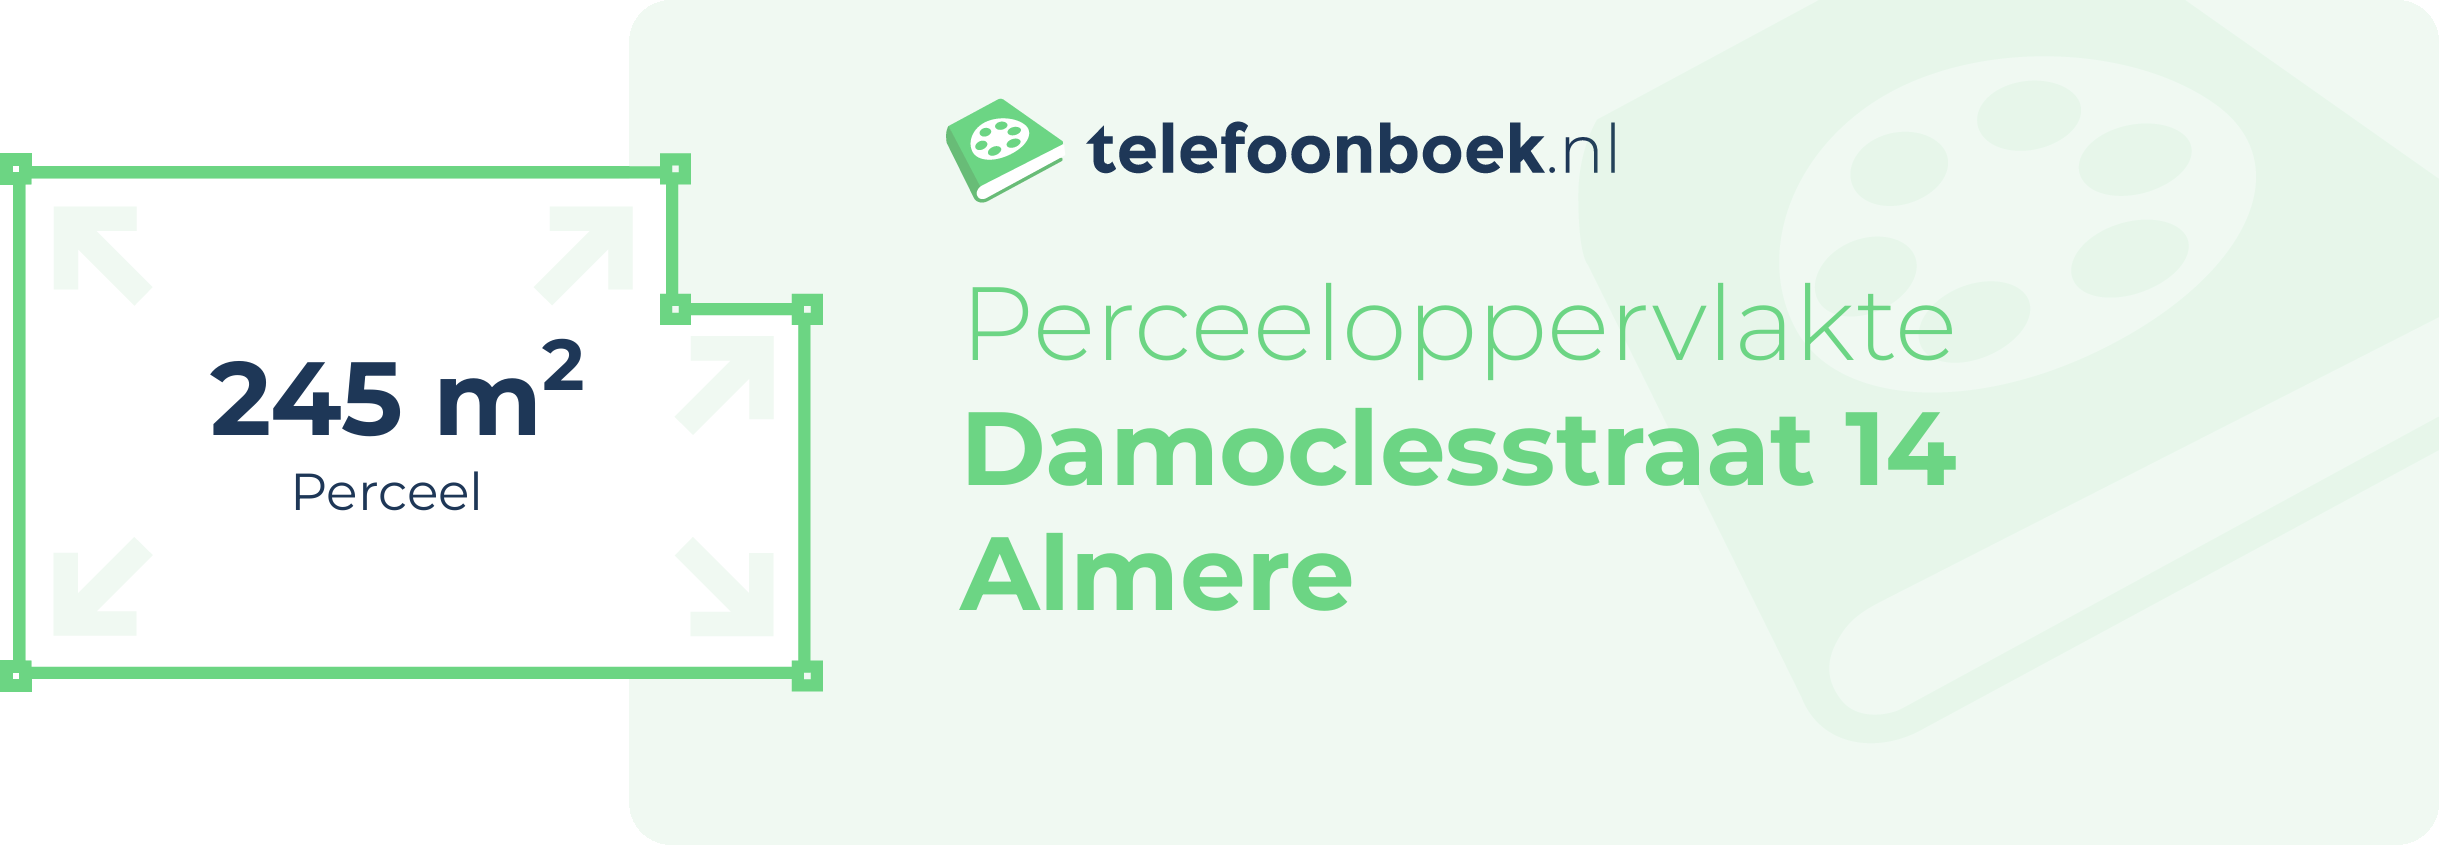 Perceeloppervlakte Damoclesstraat 14 Almere